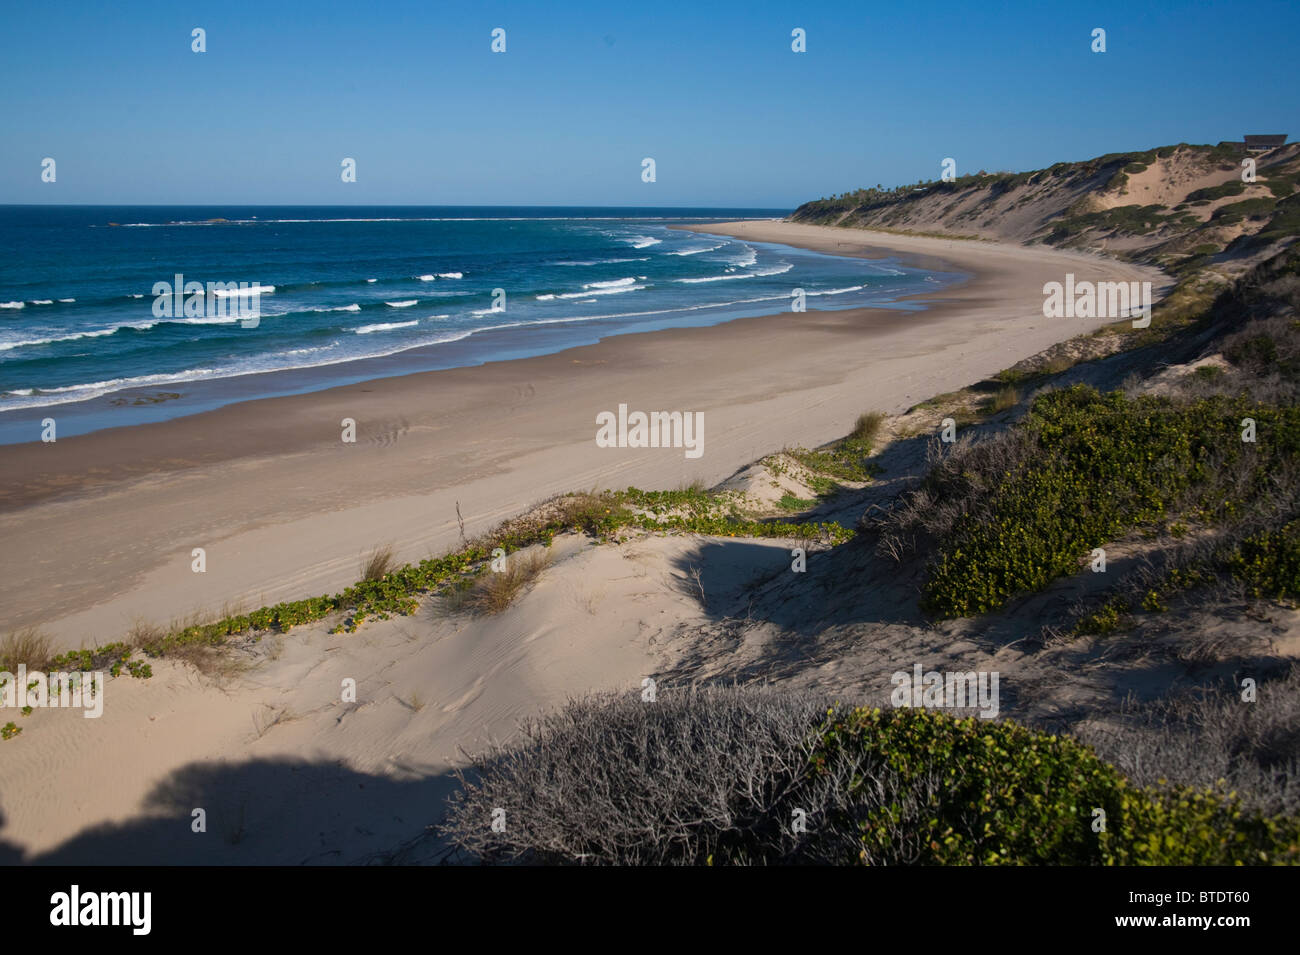 Vista panoramica di una spiaggia disabitata in una remota parte del litorale Foto Stock